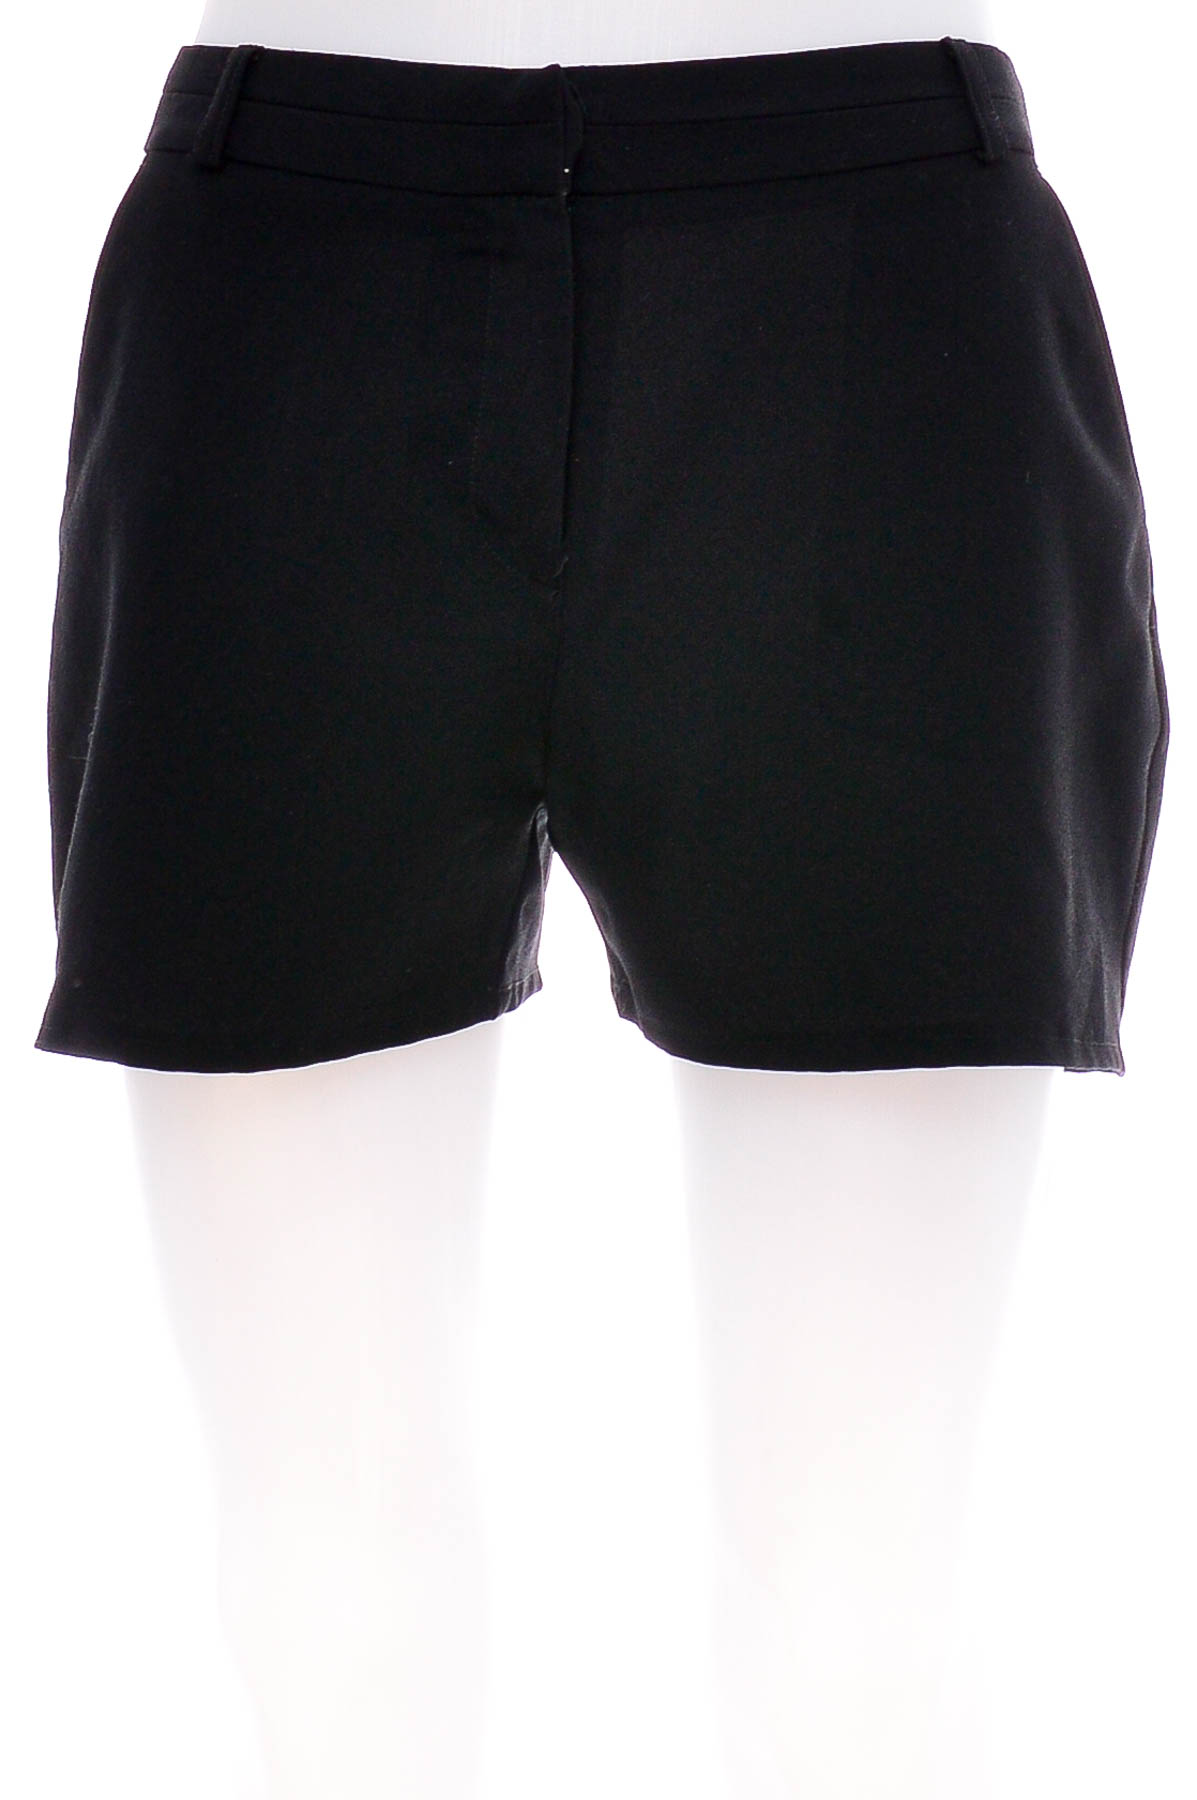 Female shorts - PRIMARK - 0